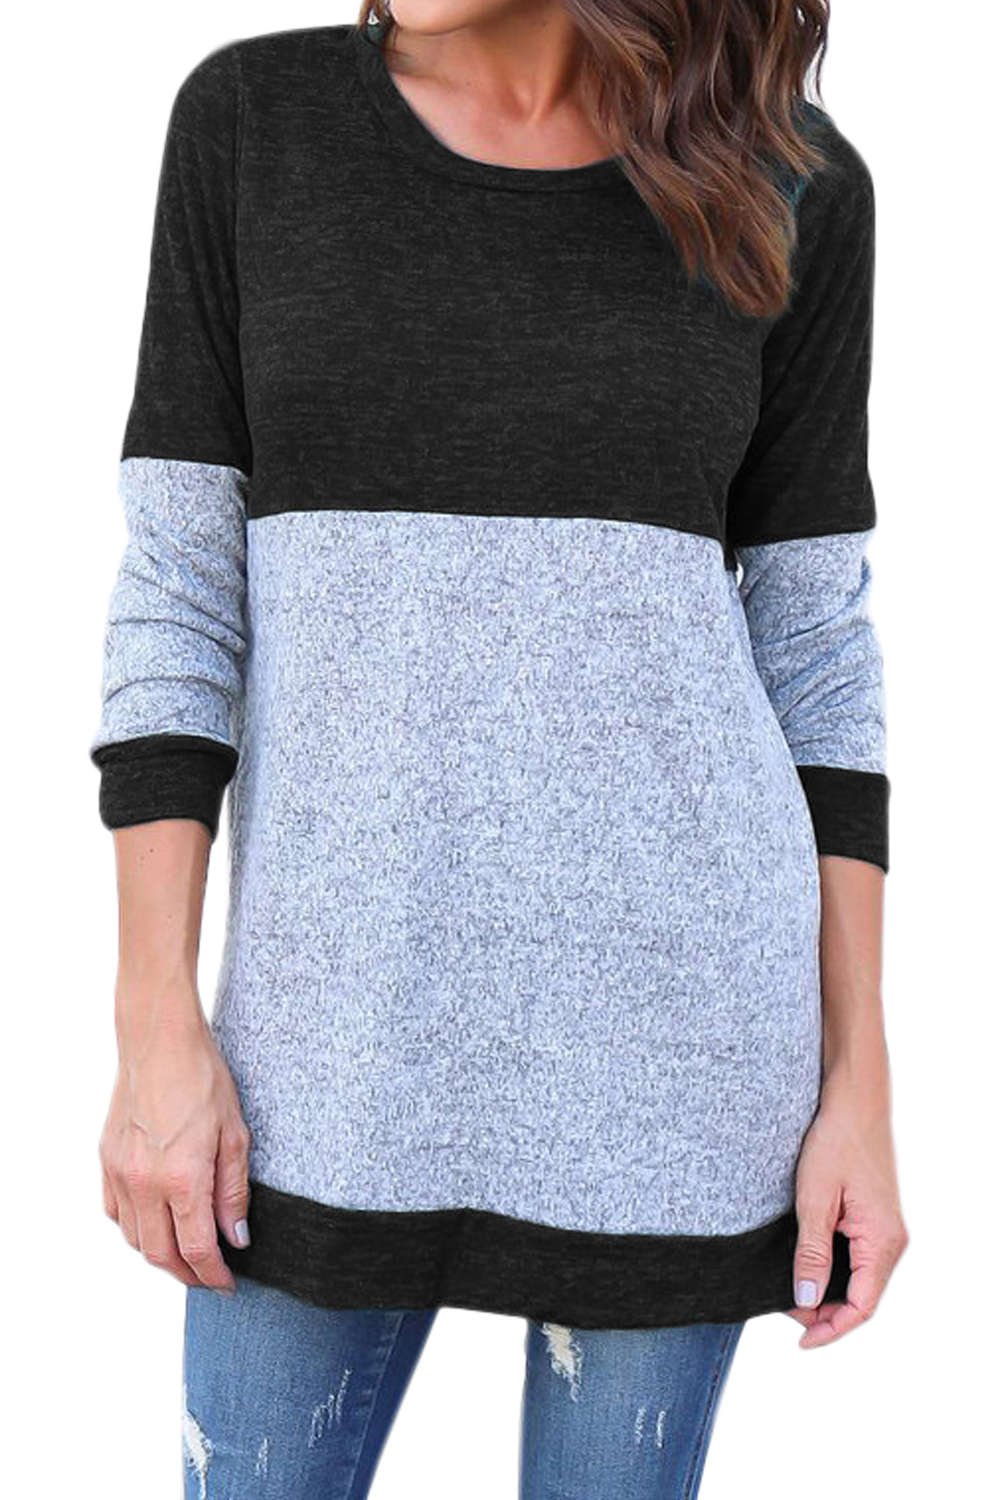 Iyasson Women's Long Sleeve T-Shirt Color Block Sweater